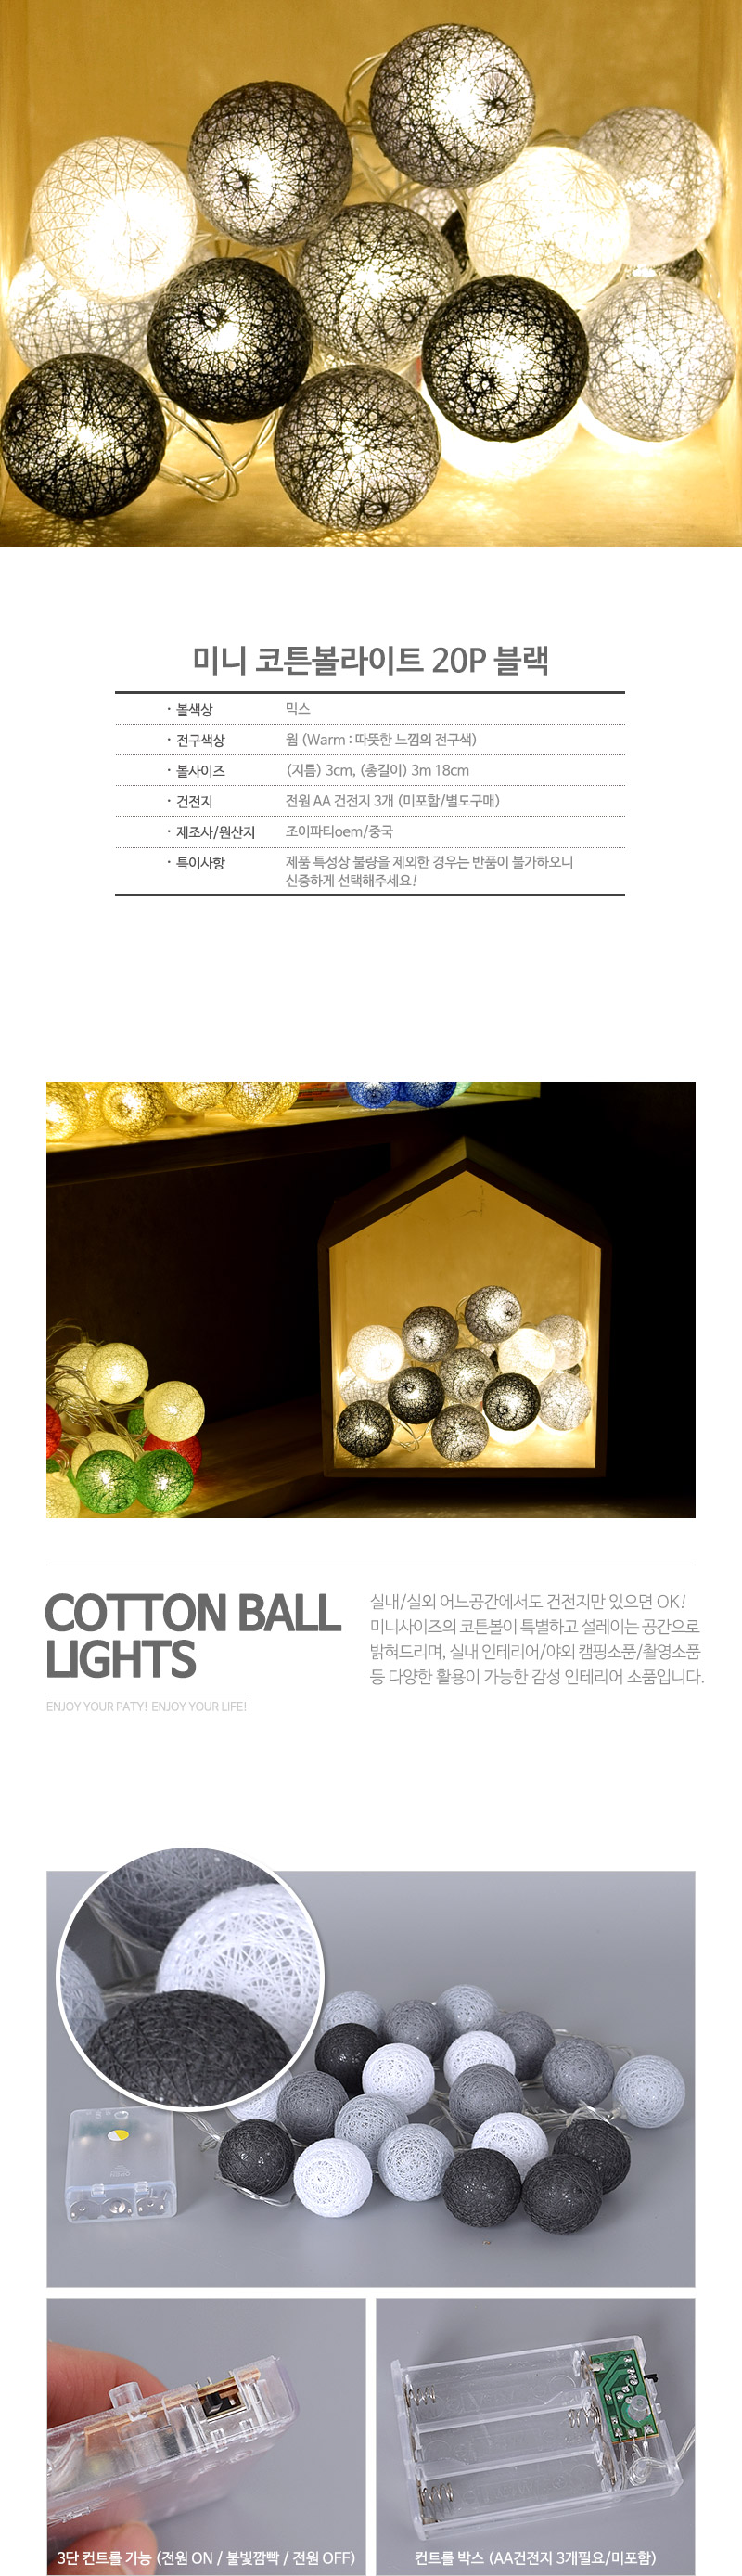 mini_cottonball20p_B_roll.jpg